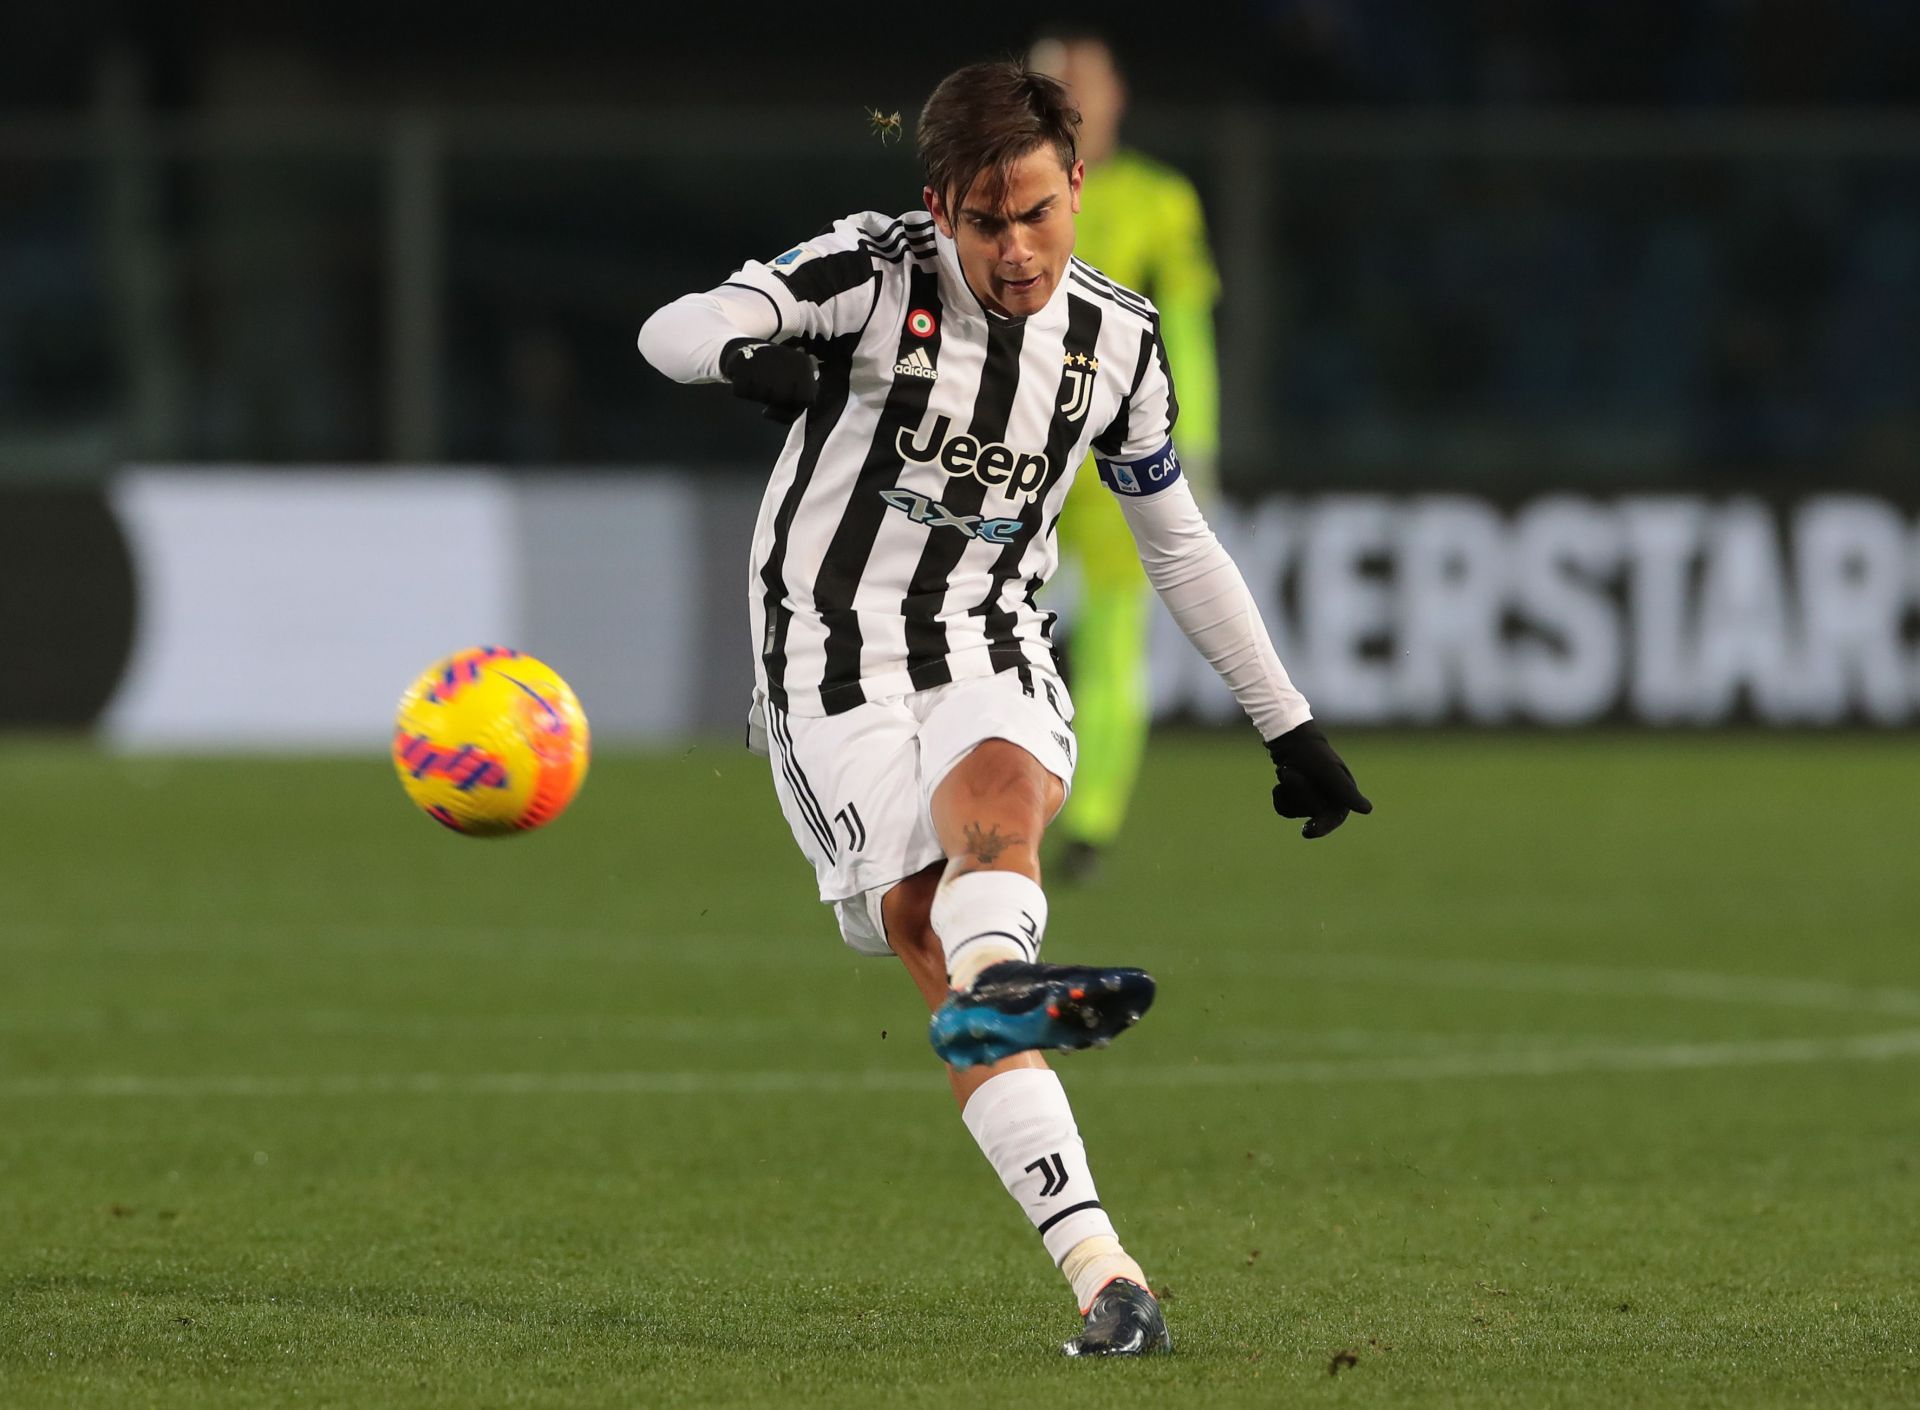 Dybala has scored 14 goals for Juventus this season